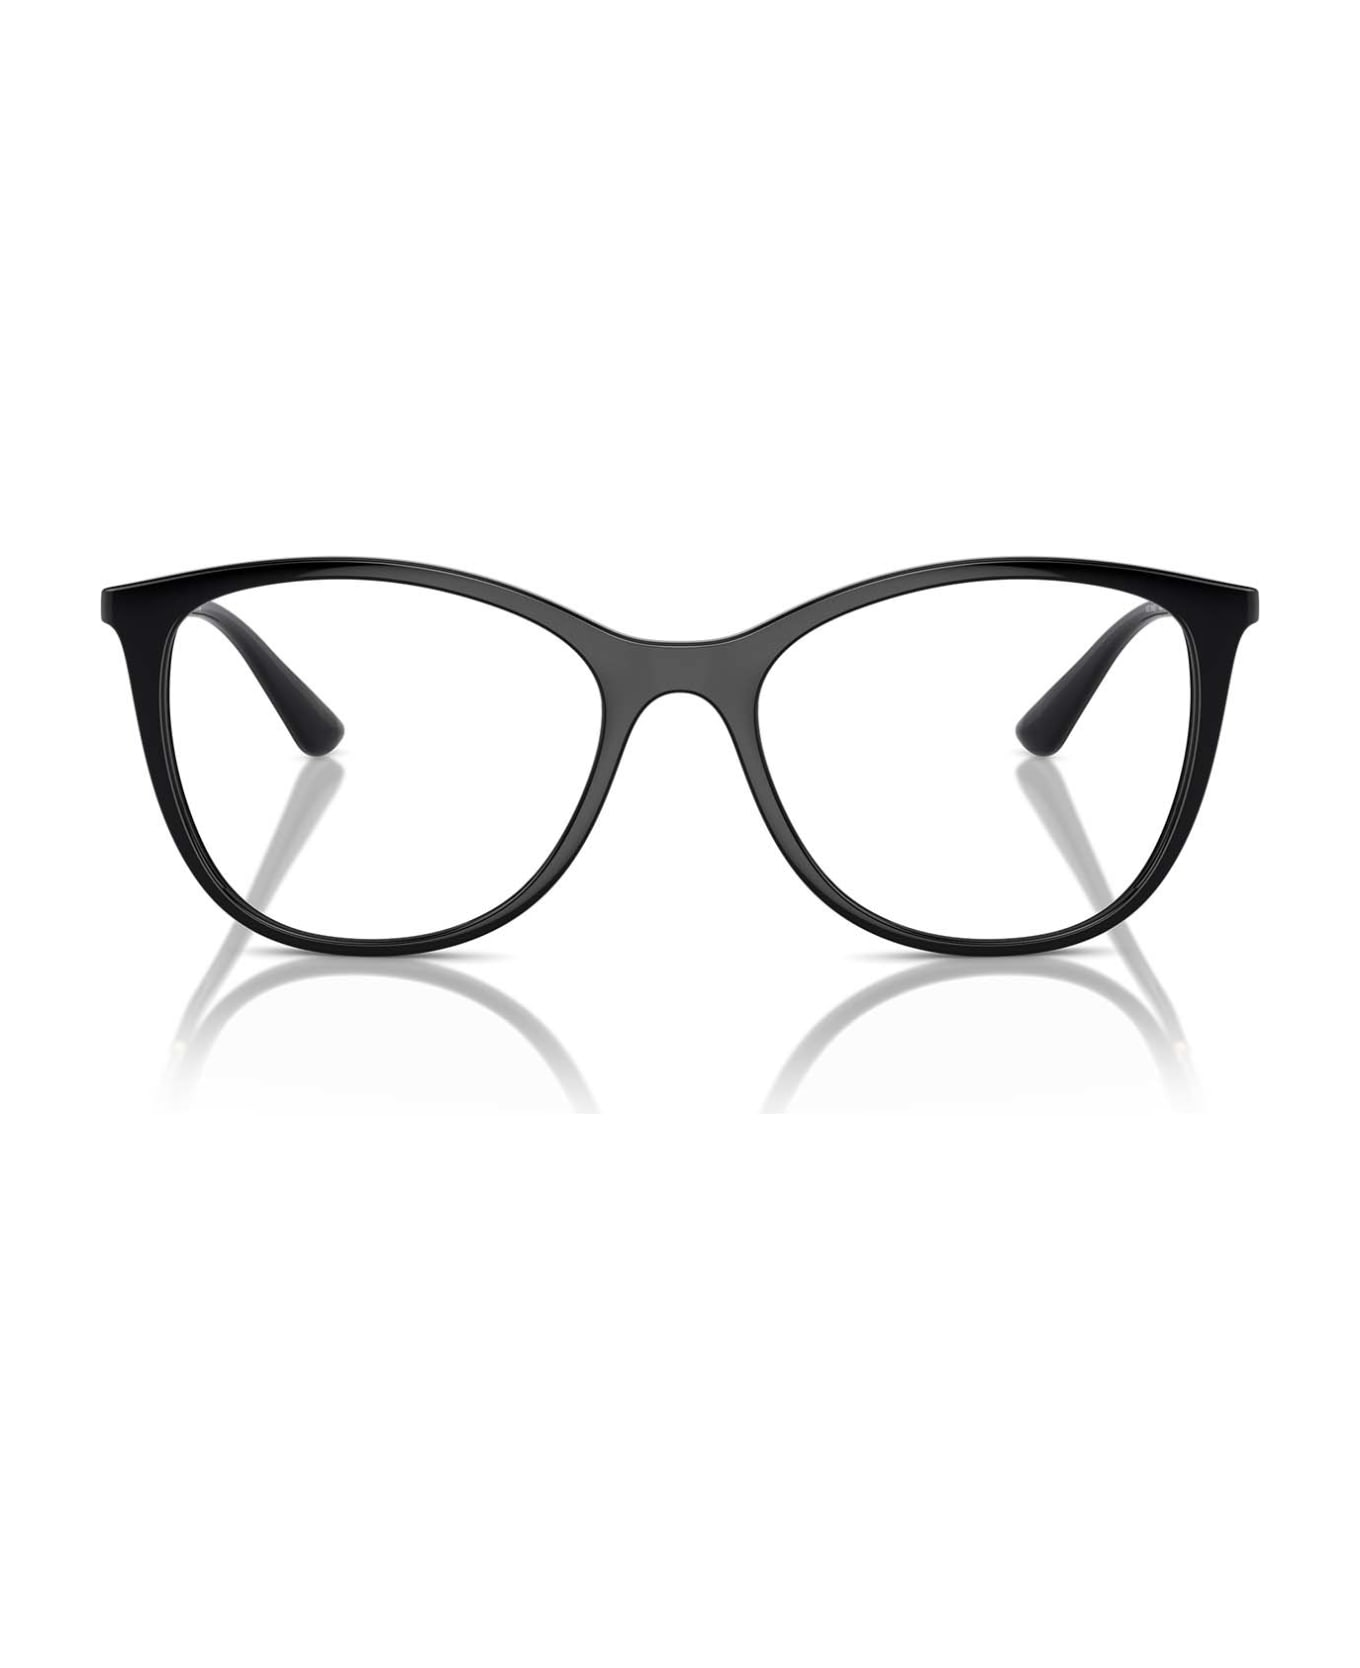 Vogue Eyewear Vo5562 Black Glasses - Black